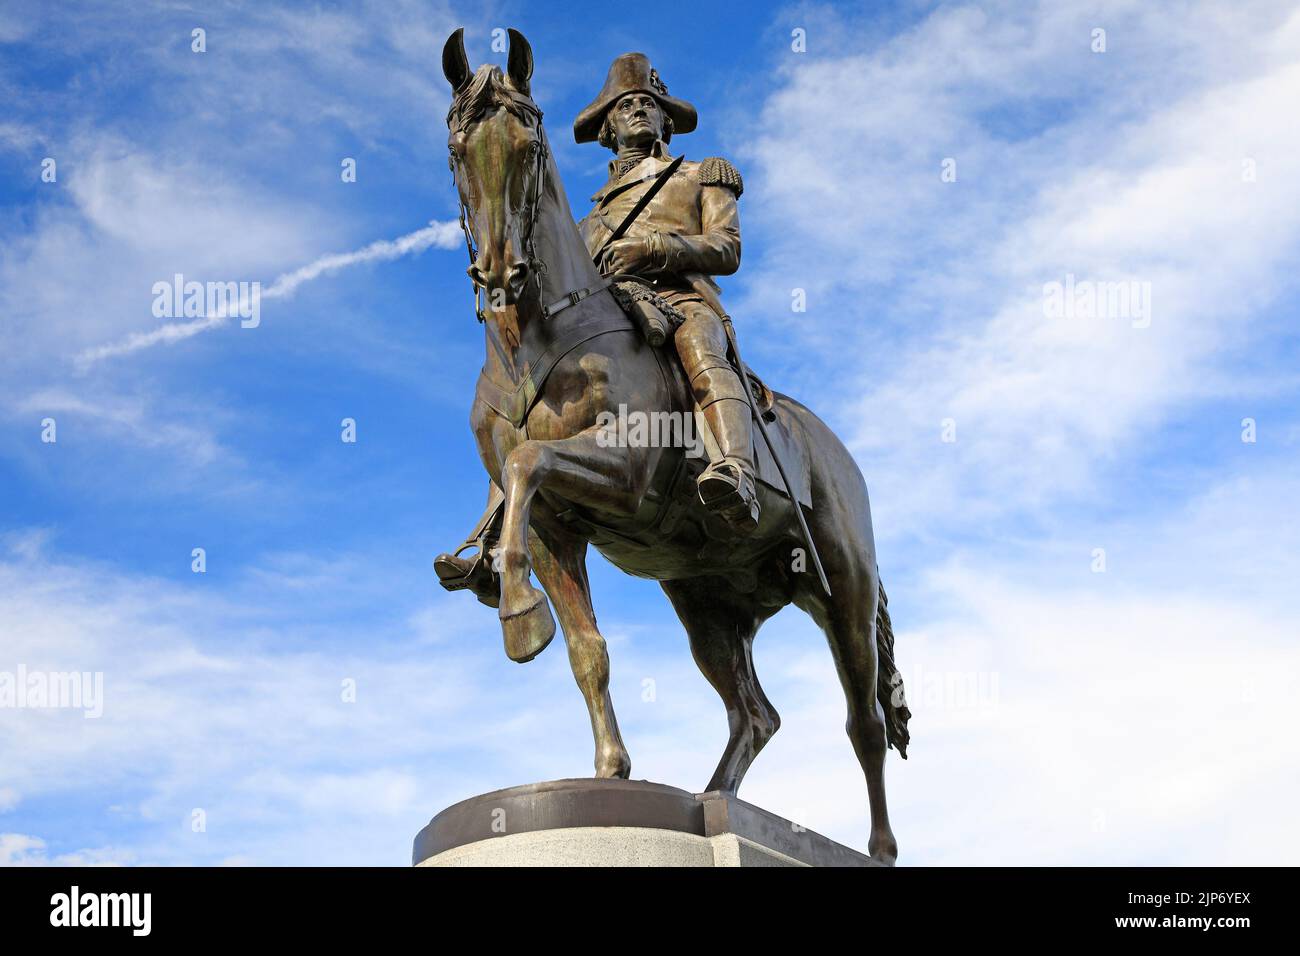 George Washington statue is the famous landmark in Boston Public Garden, USA Stock Photo